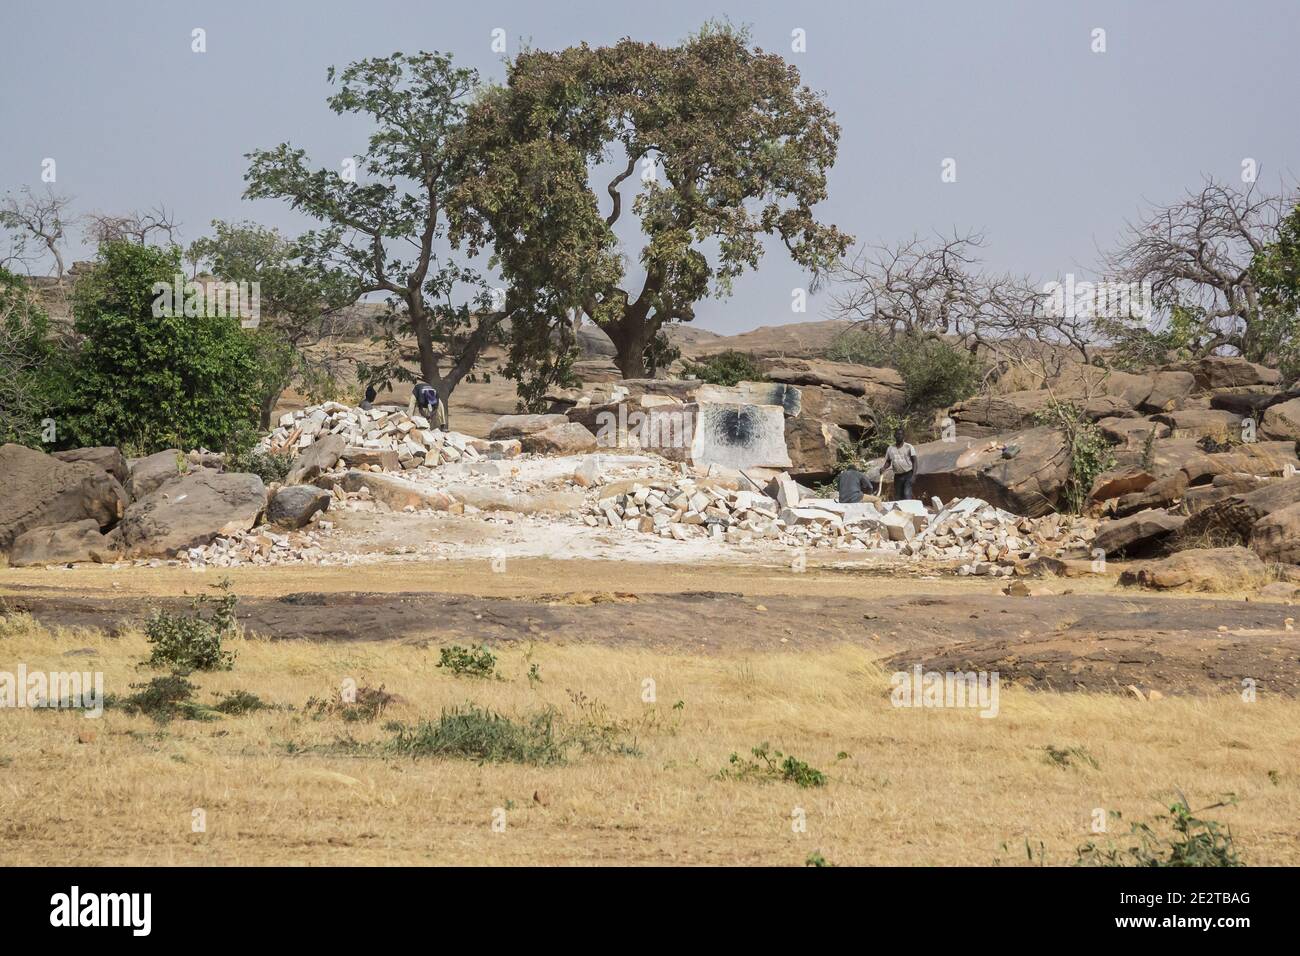 Adolescents crushing stones in a stone quarry near Segou, Mali Stock Photo